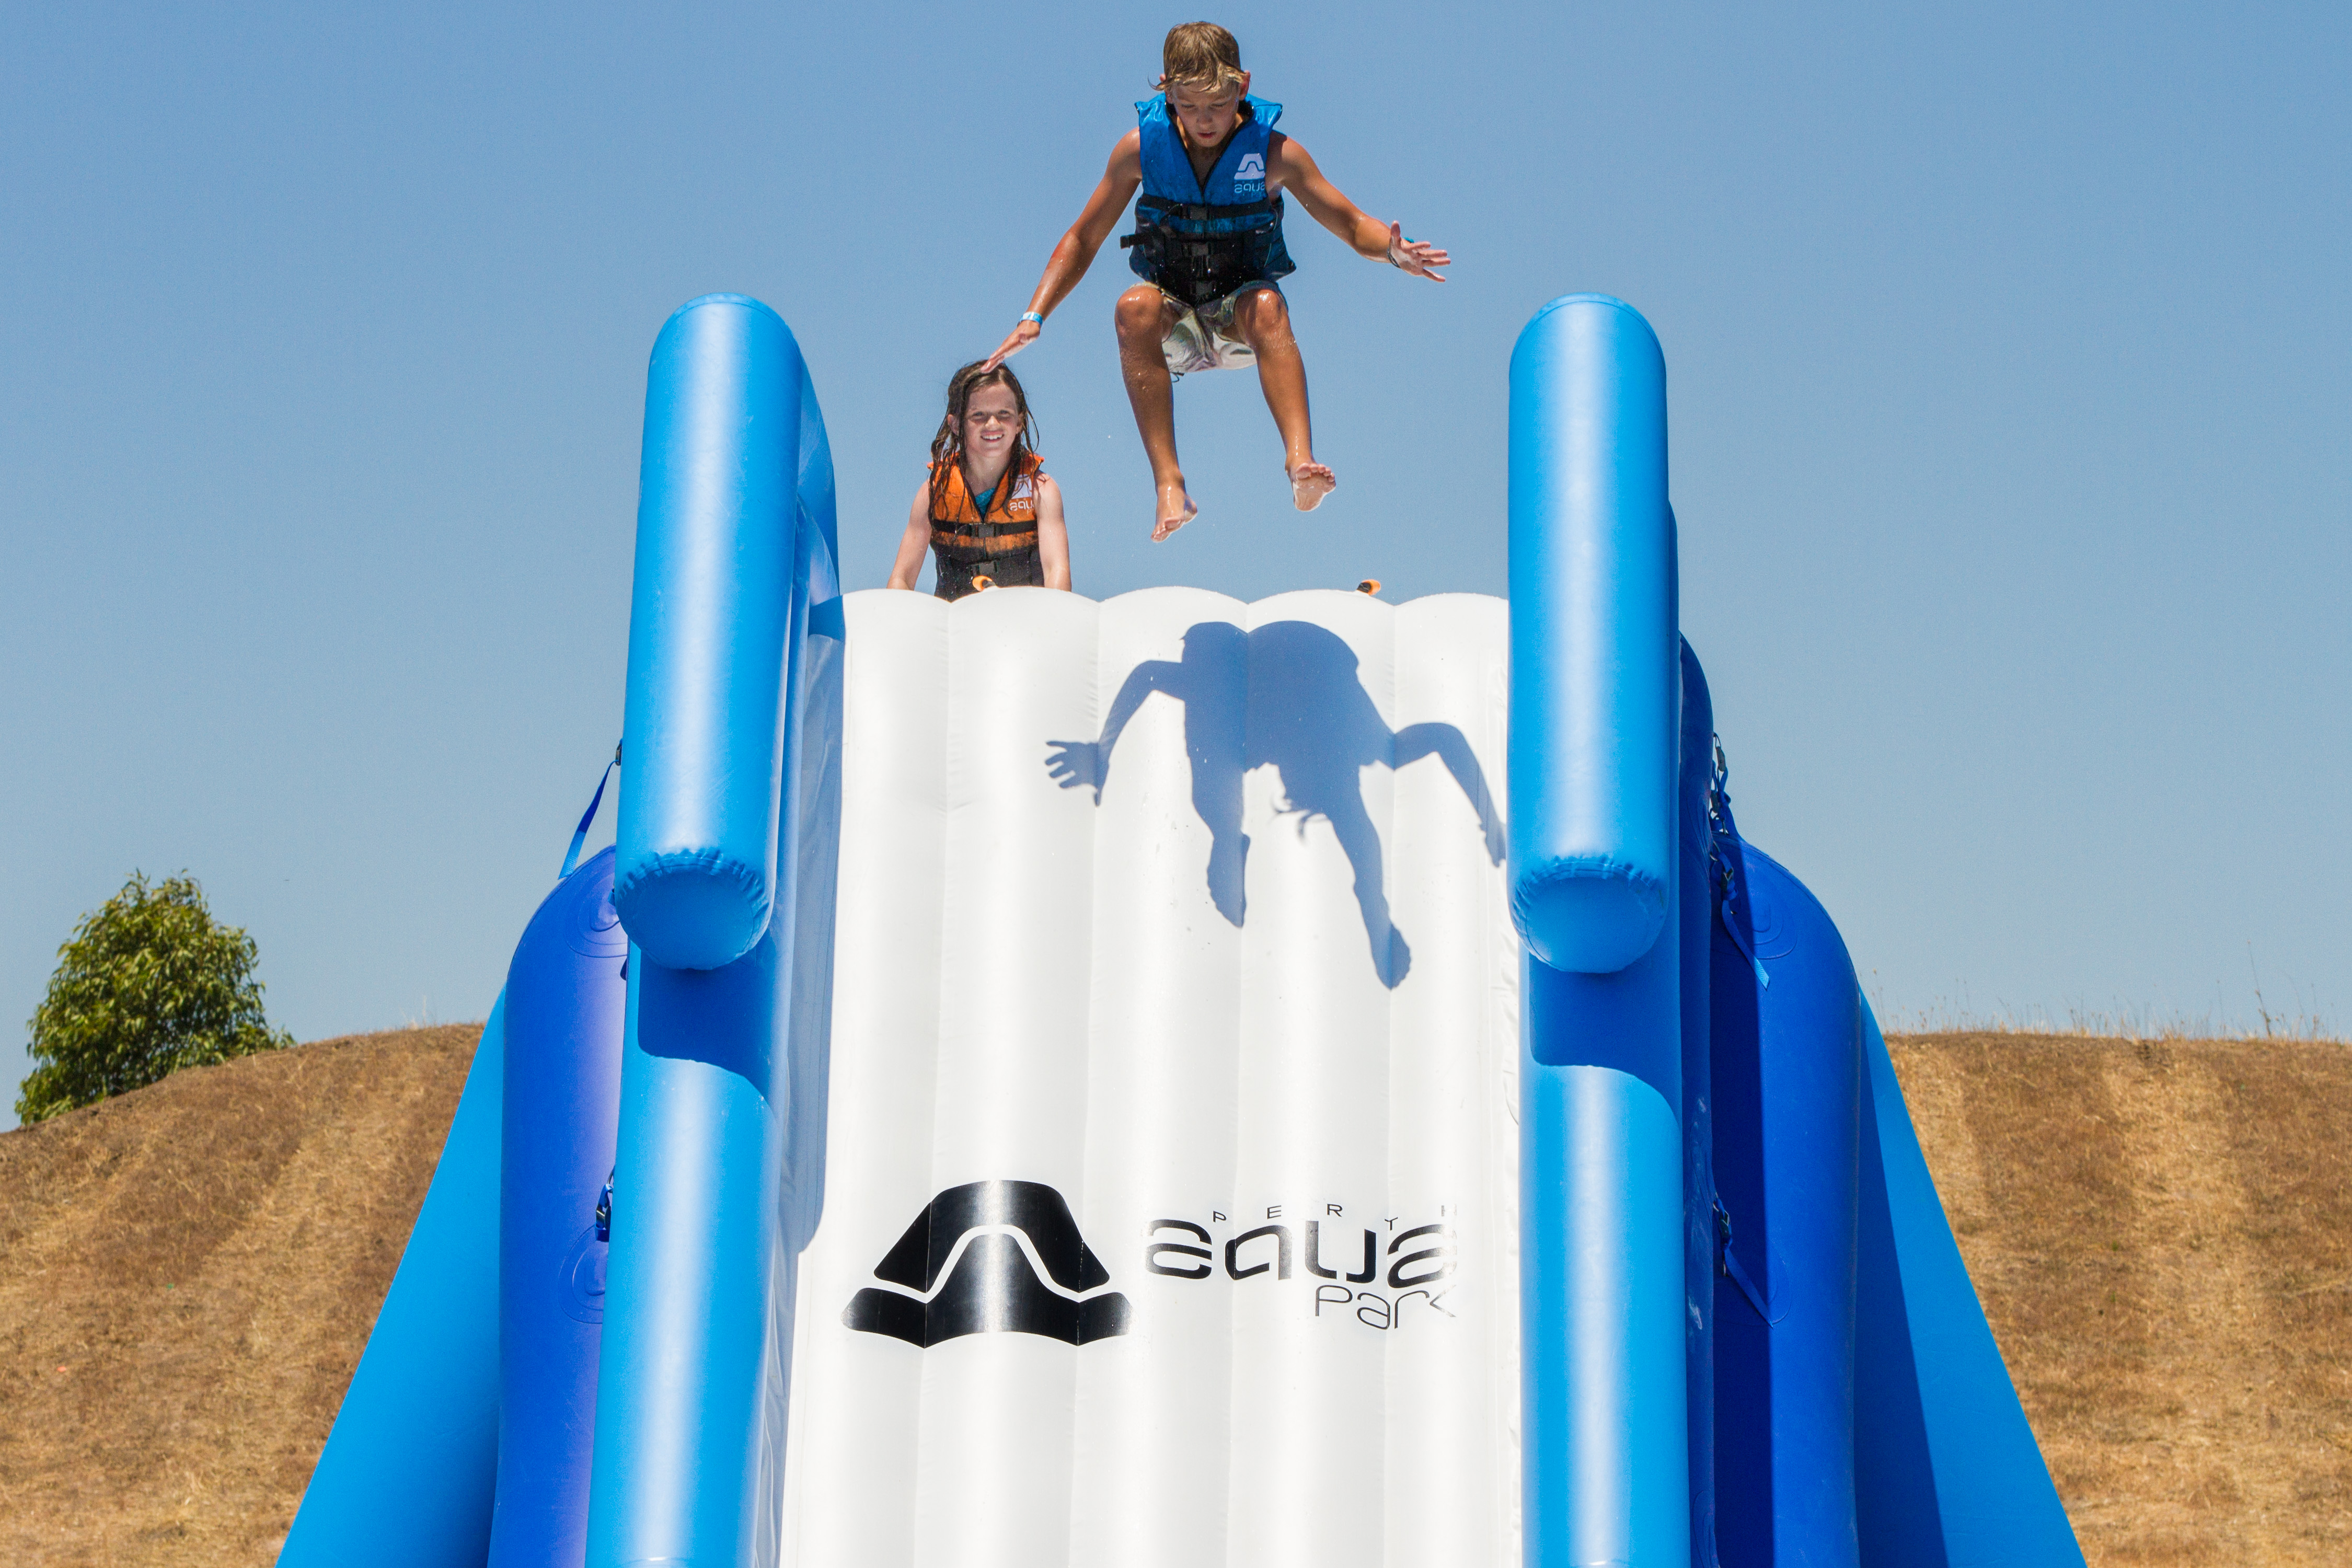 Quinn Slide jump